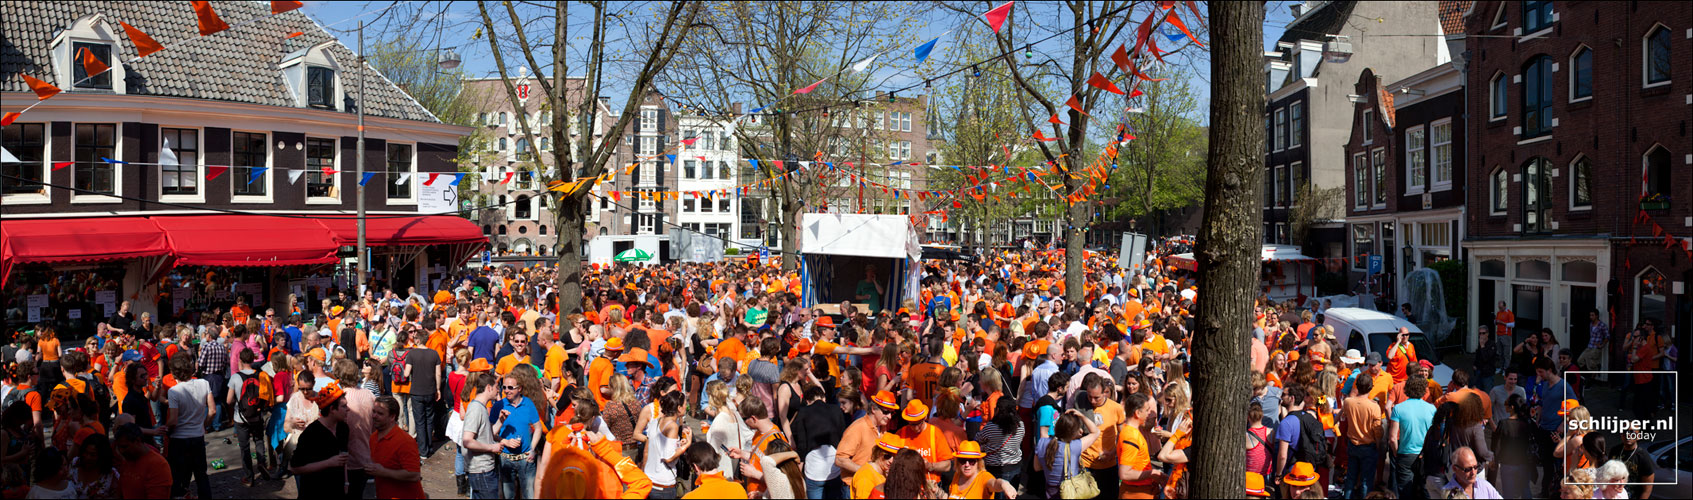 Nederland, Amsterdam, 30 april 2012